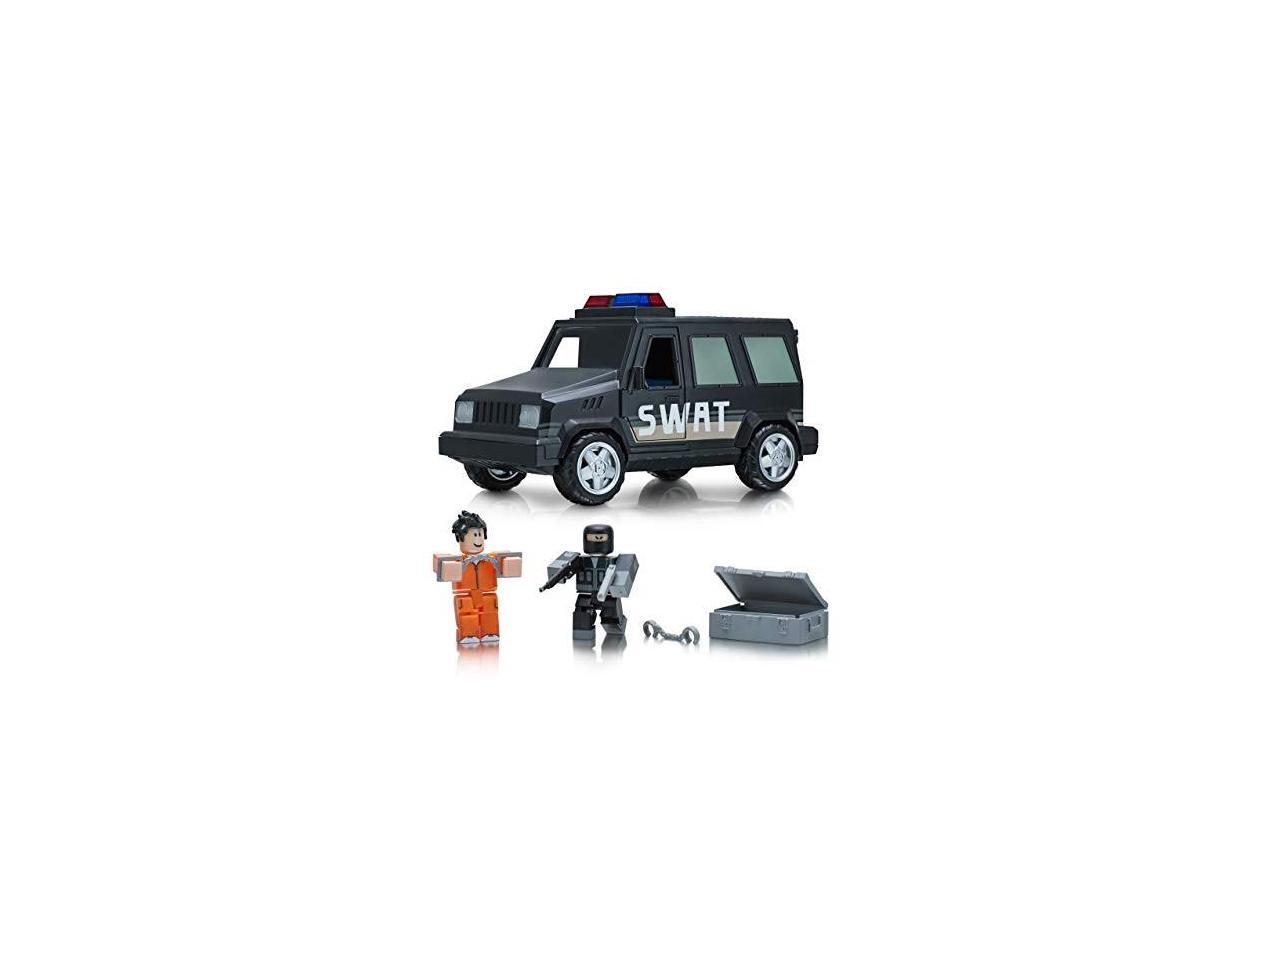 Roblox Jailbreak Swat Unit Vehicle Newegg Com - roblox toys swat vehicle roblox release date